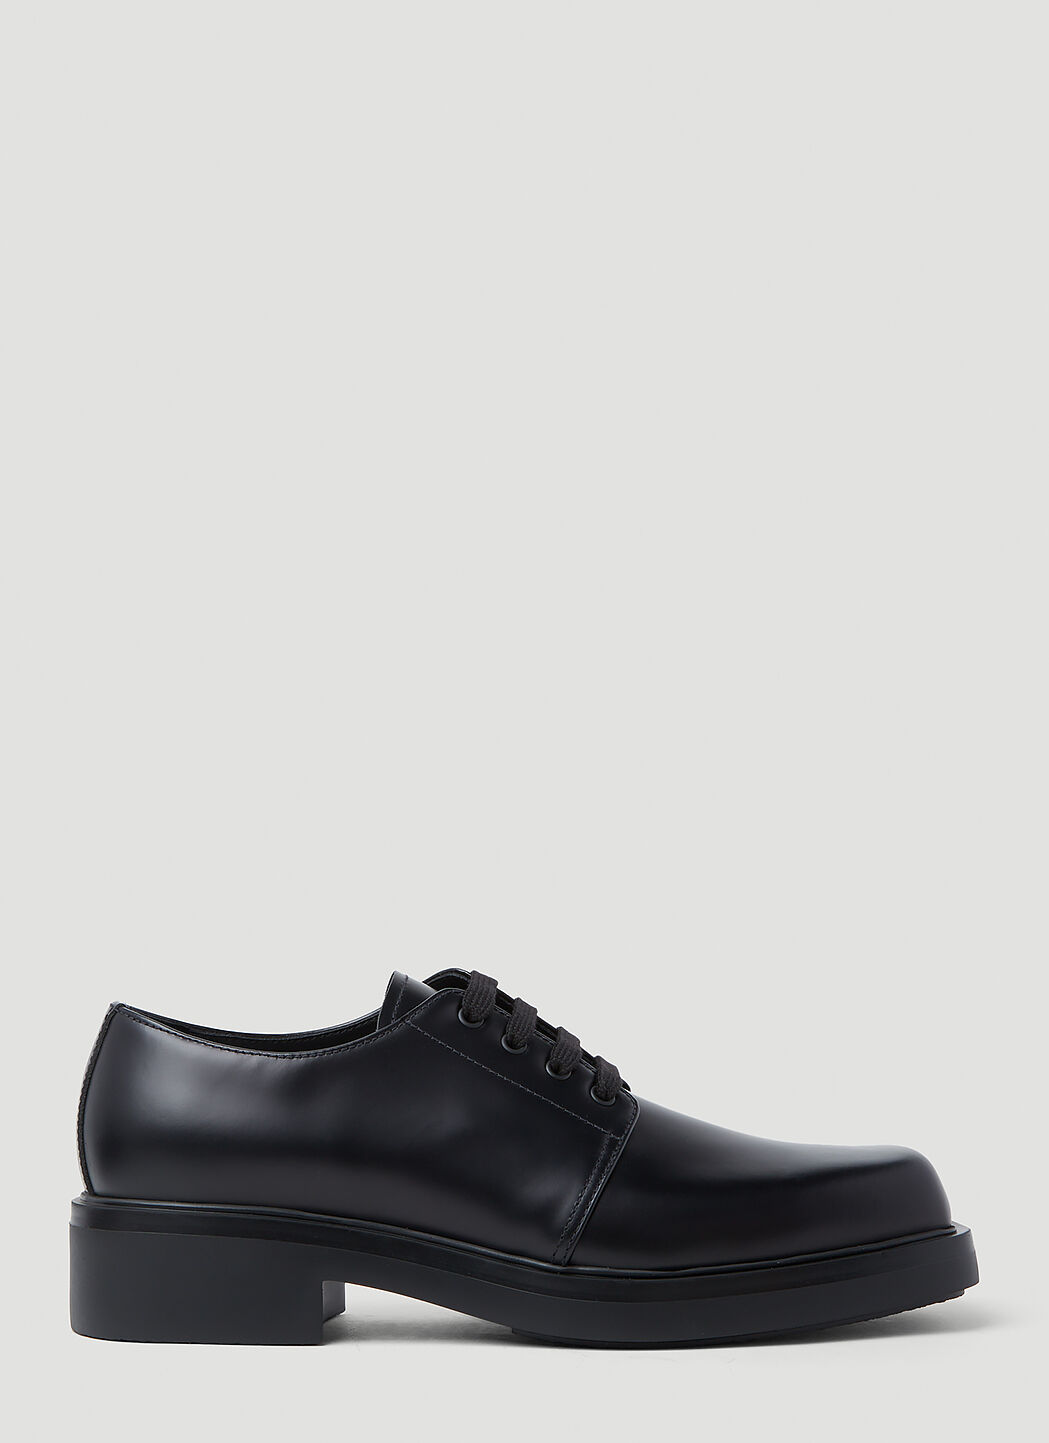 Comme des Garçons Homme Plus Brushed Leather Derby shoes Black hpl0156006